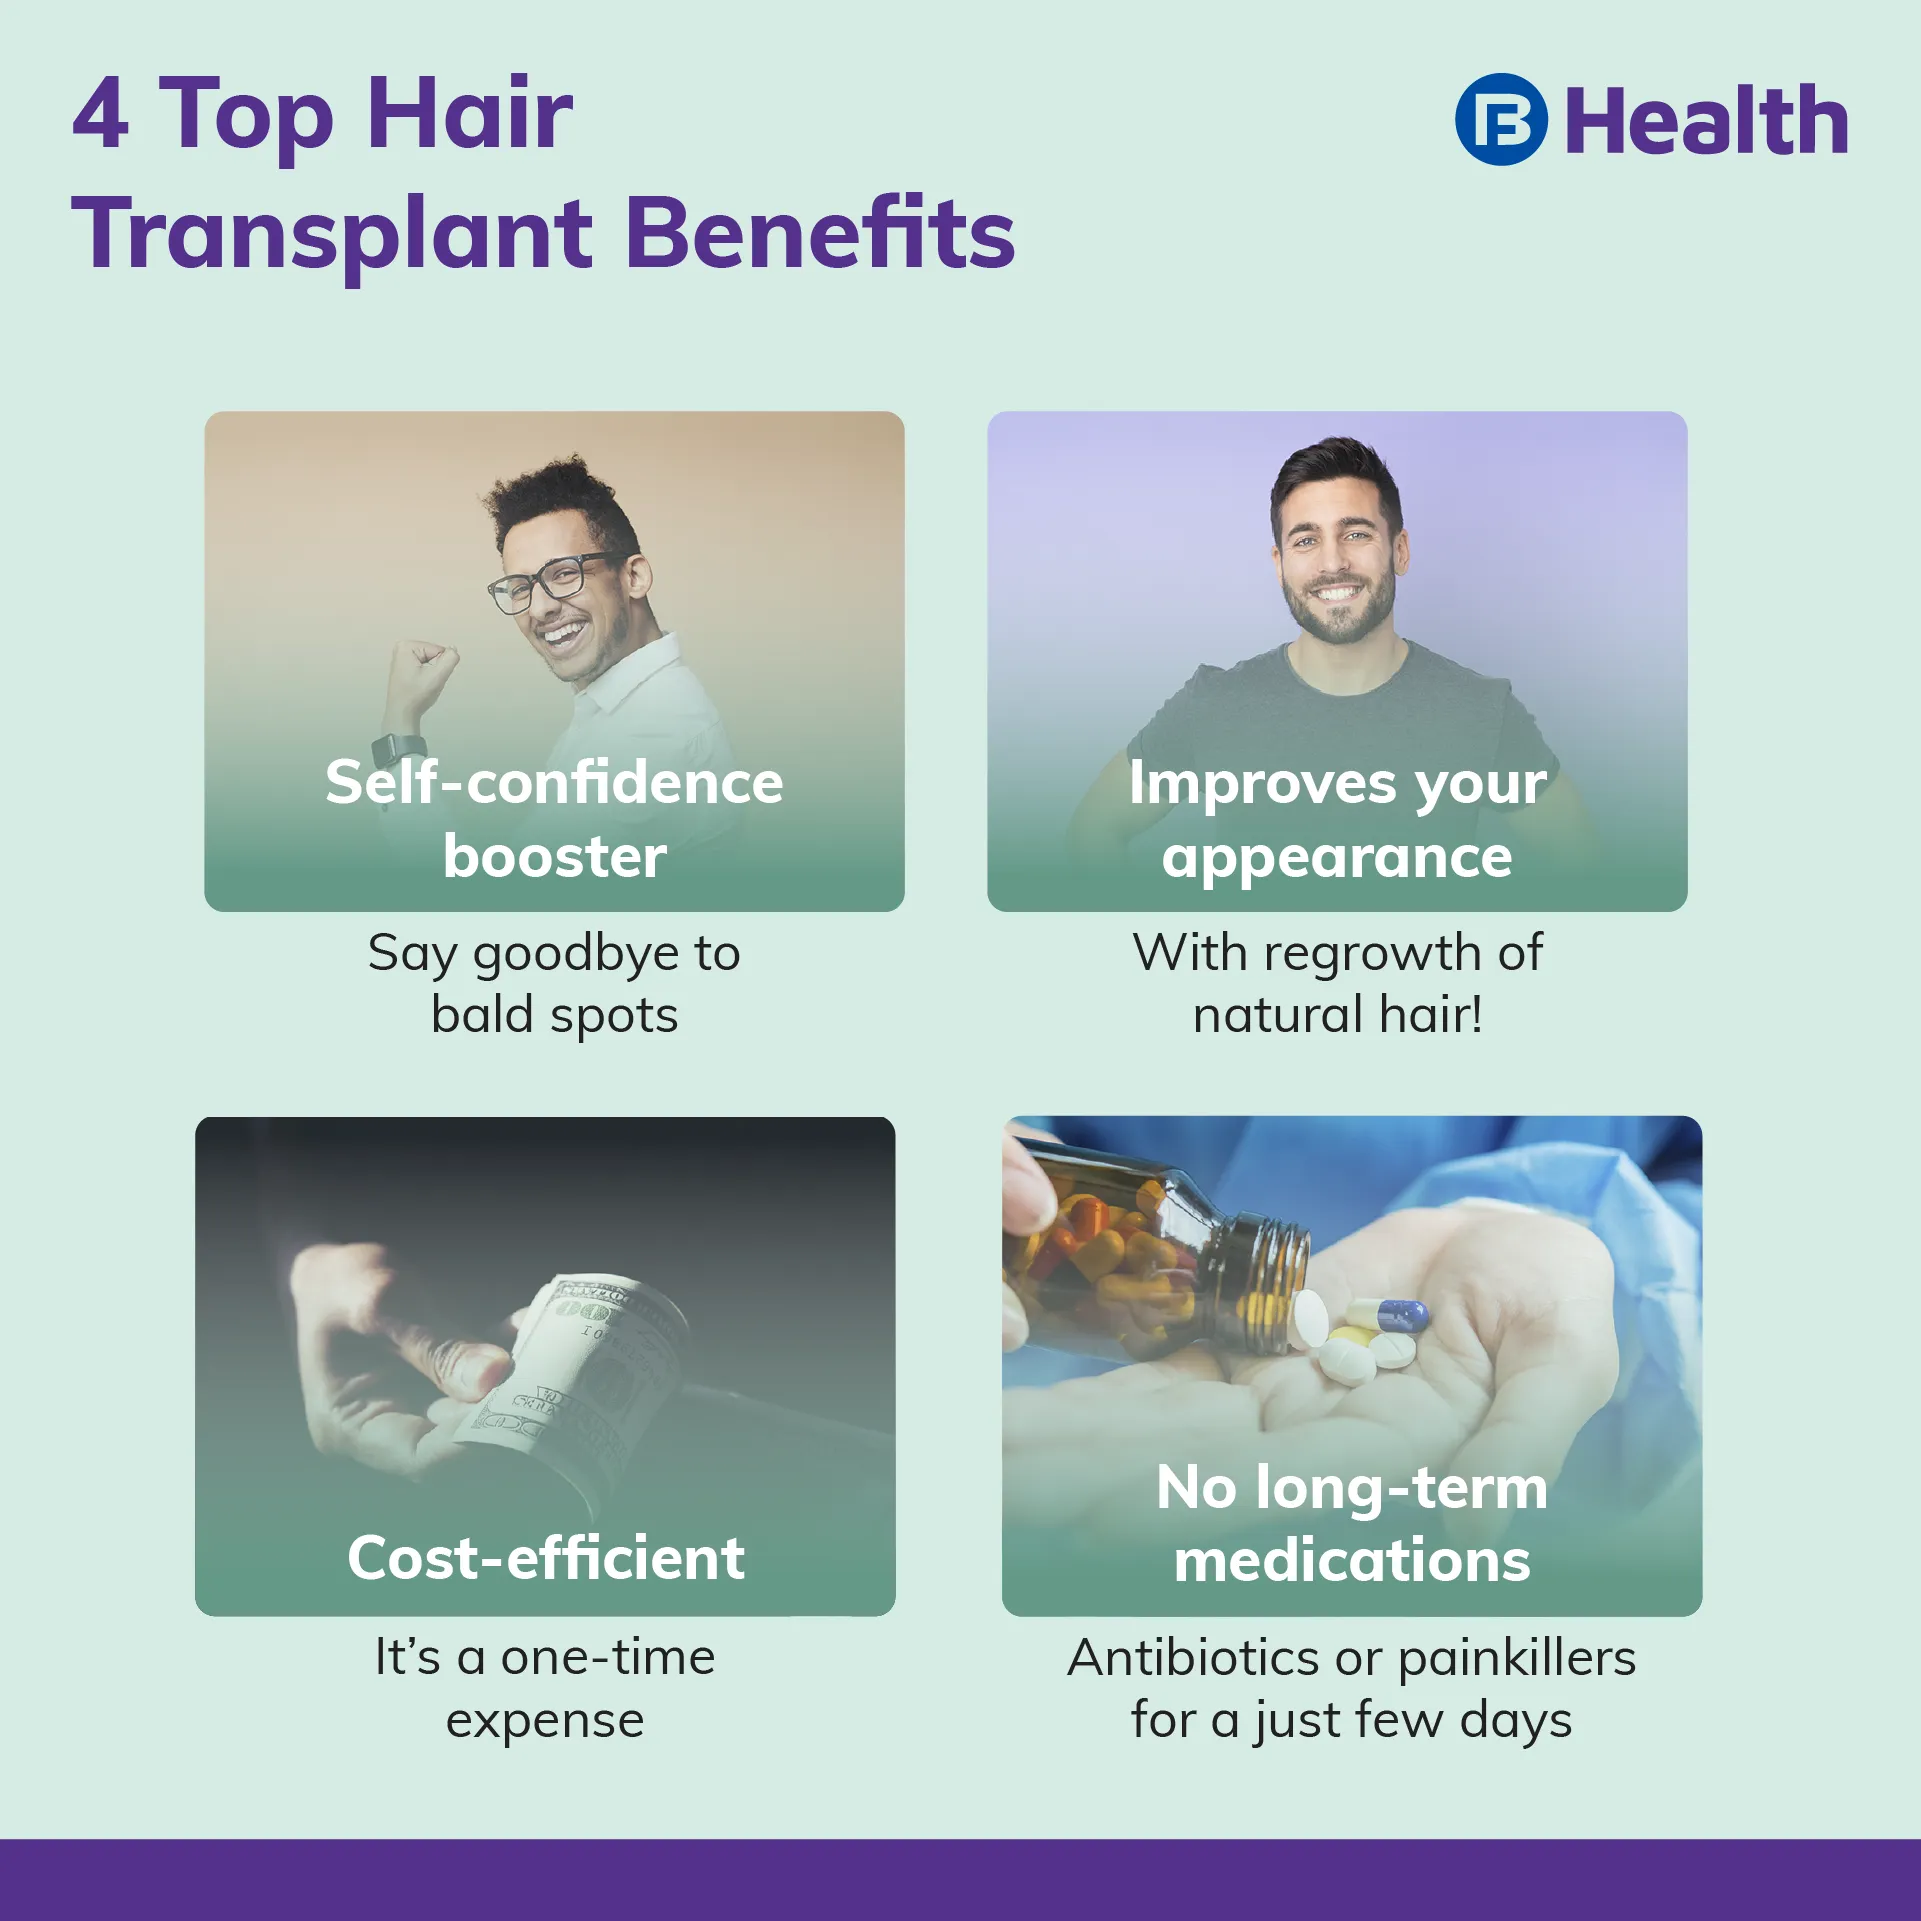 hair transplant benefits